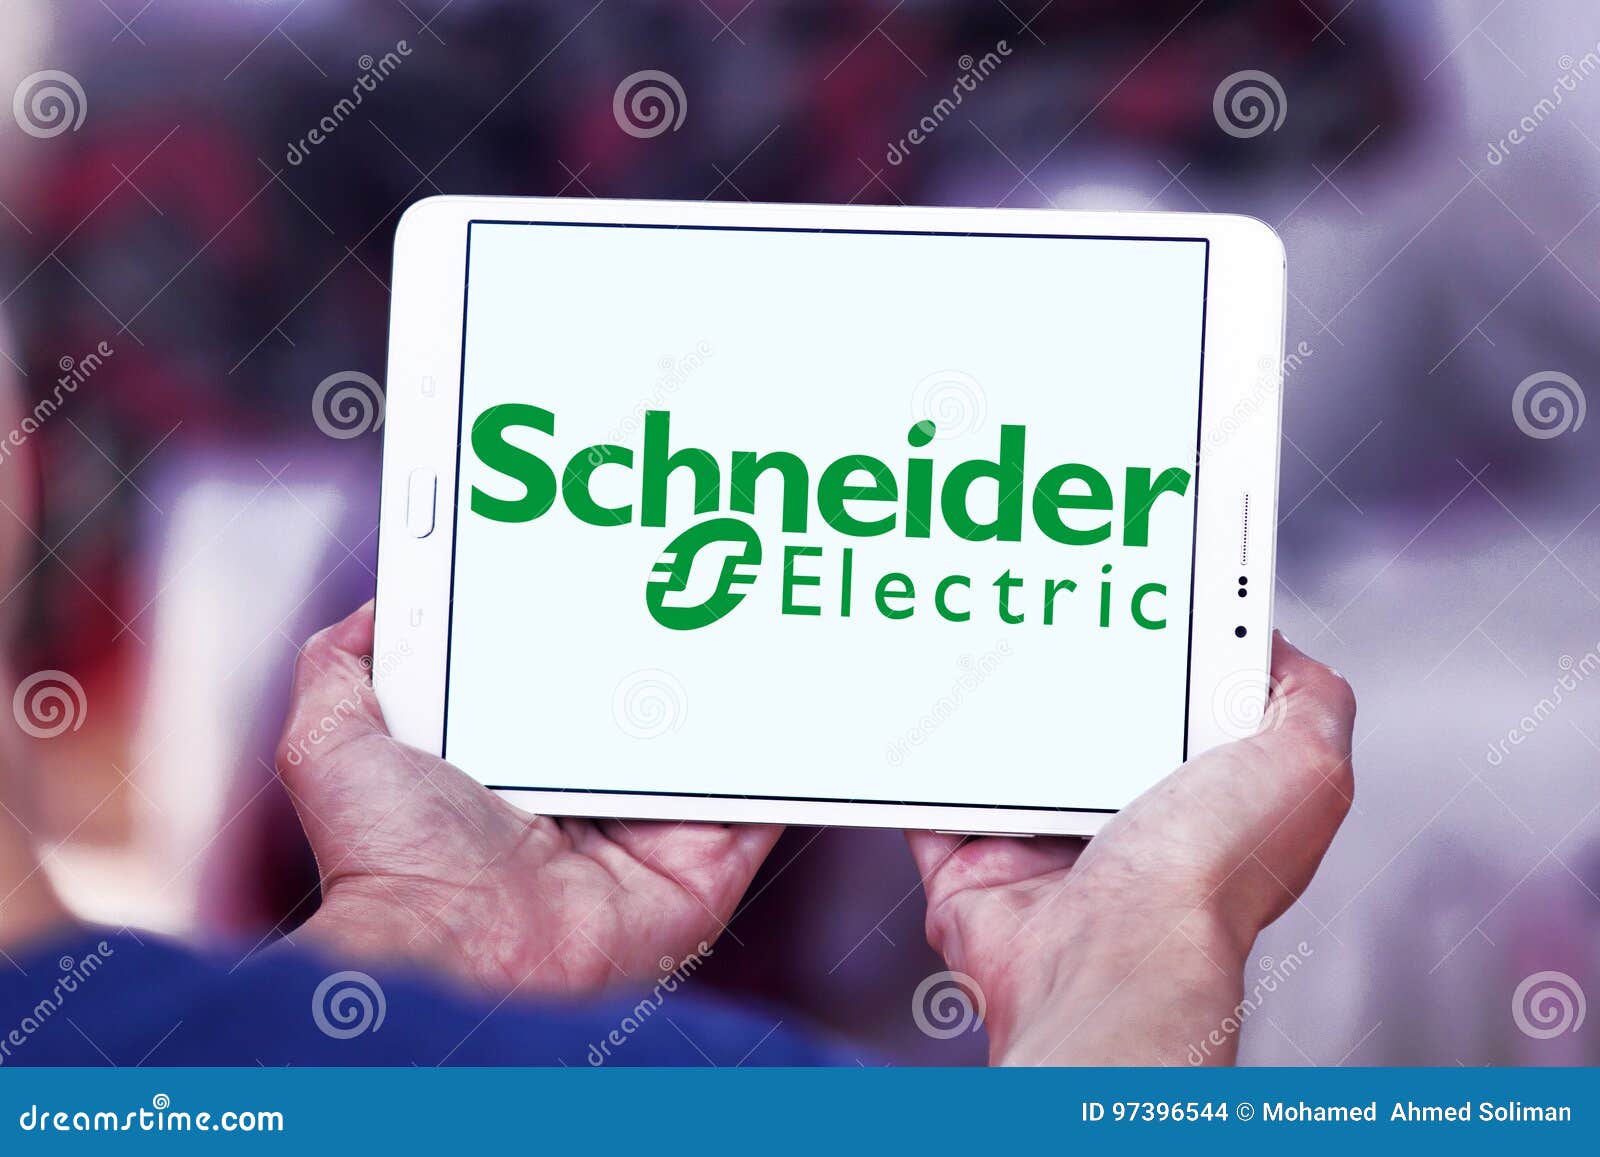 Schneider Electric Energy Company Logo Editorial Stock Image